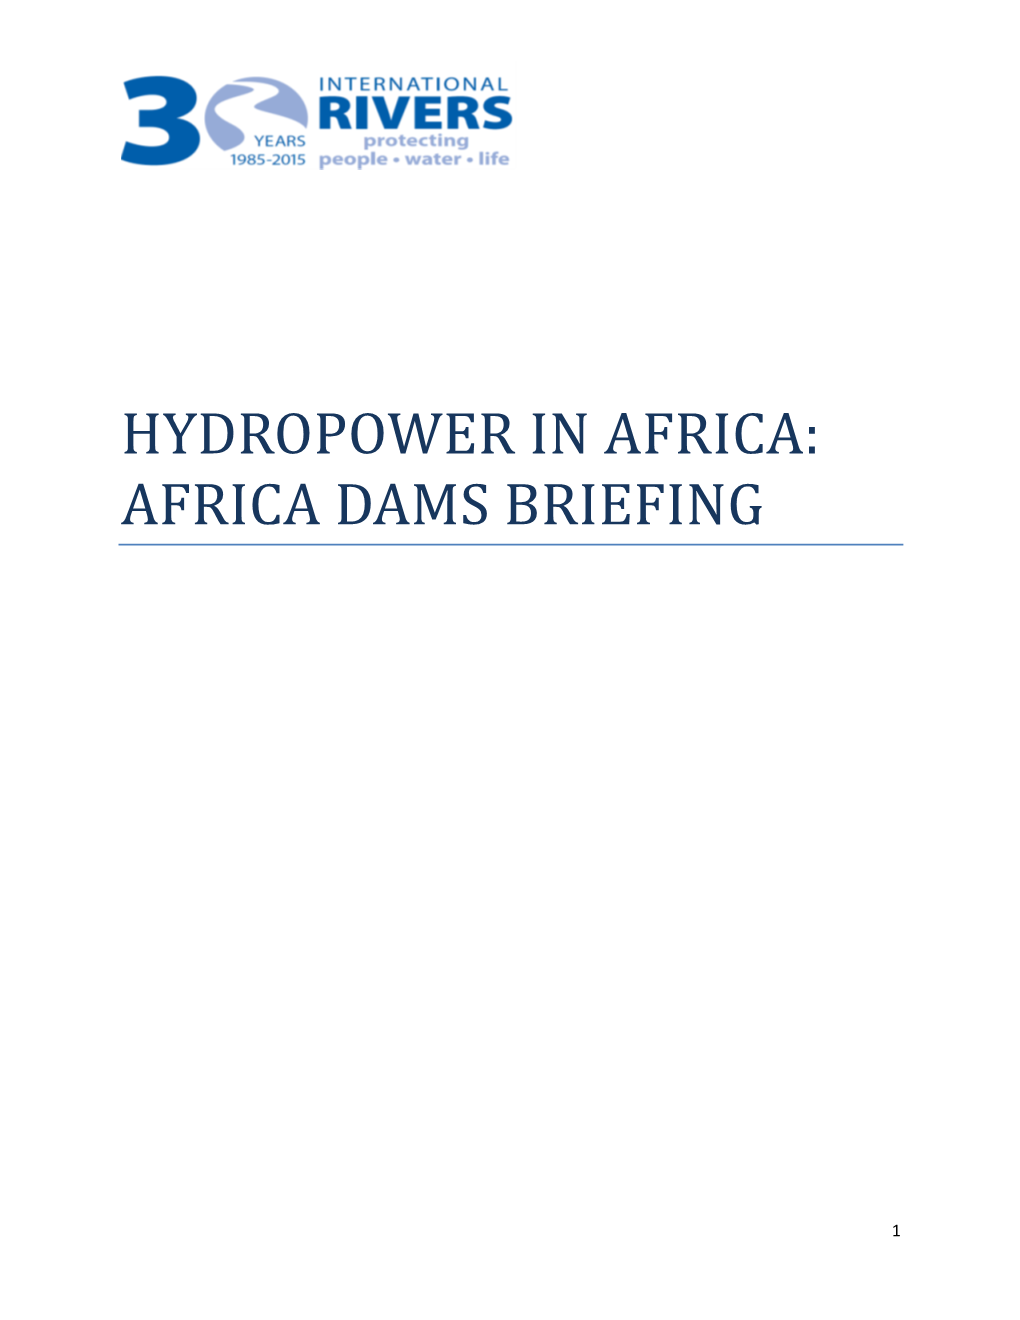 Hydropower in Africa: Africa Dams Briefing